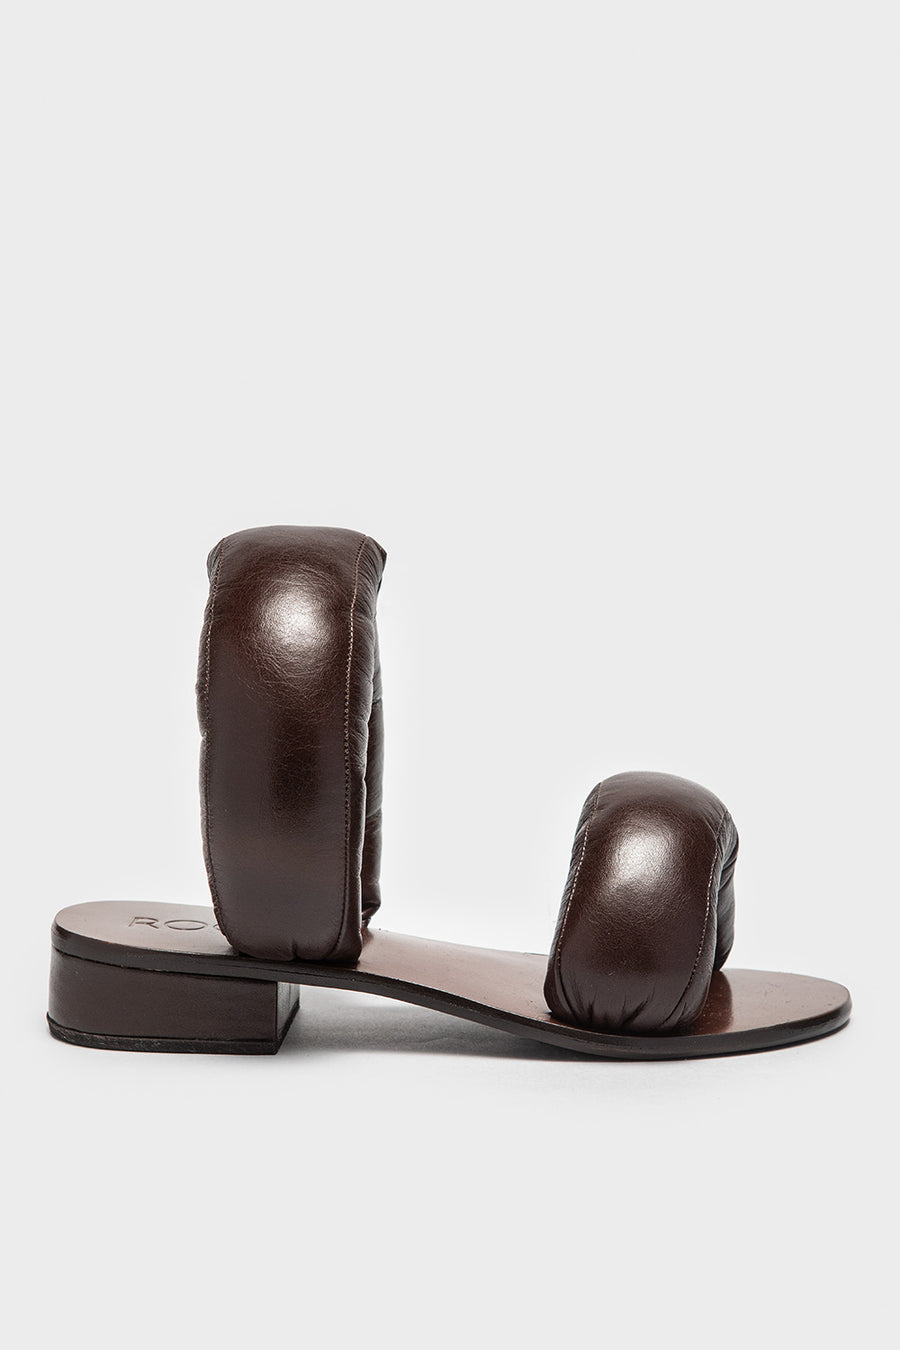 Sandalo Room da donna in pelle color coffee pillow sandal